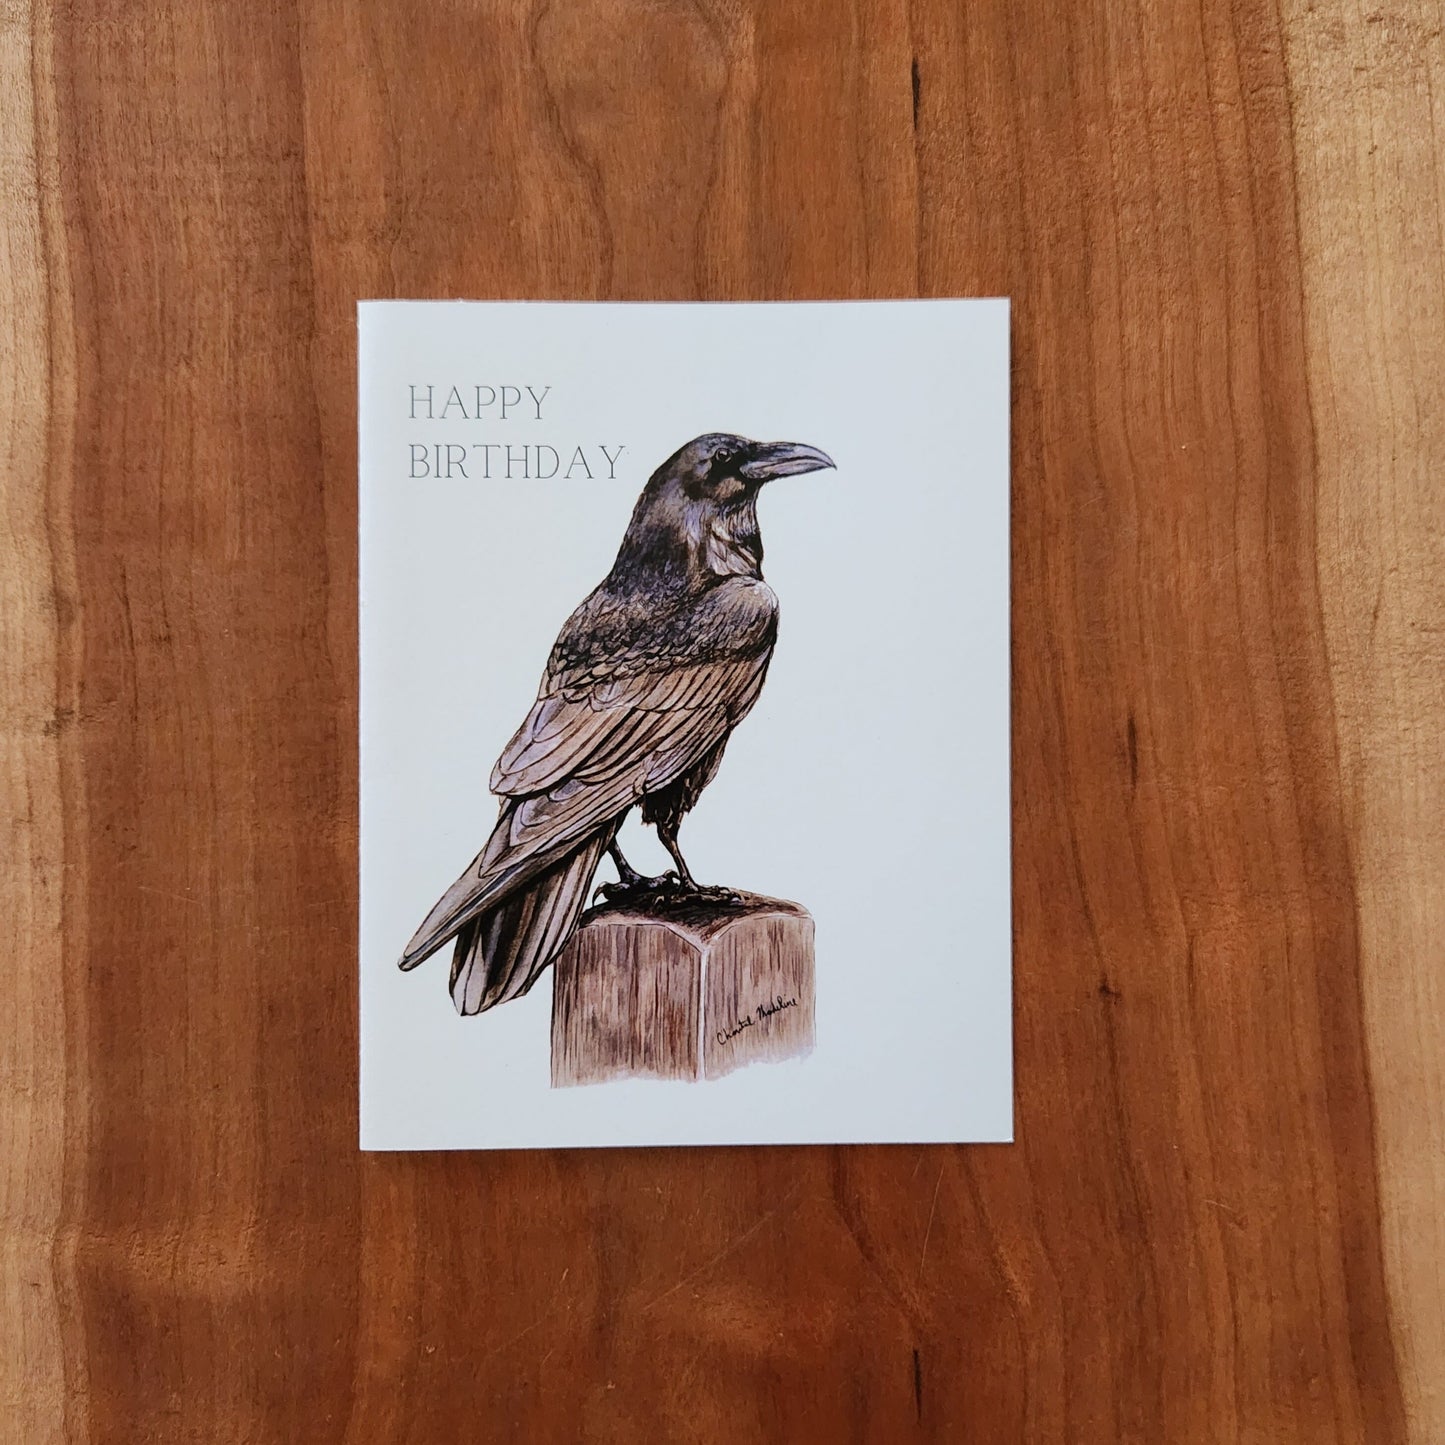 Happy birthday raven card, Gothic crow woodland animal greeting card, Bird lover bday card, Outdoorsy card for dad, Grandpa, Friend, Mom